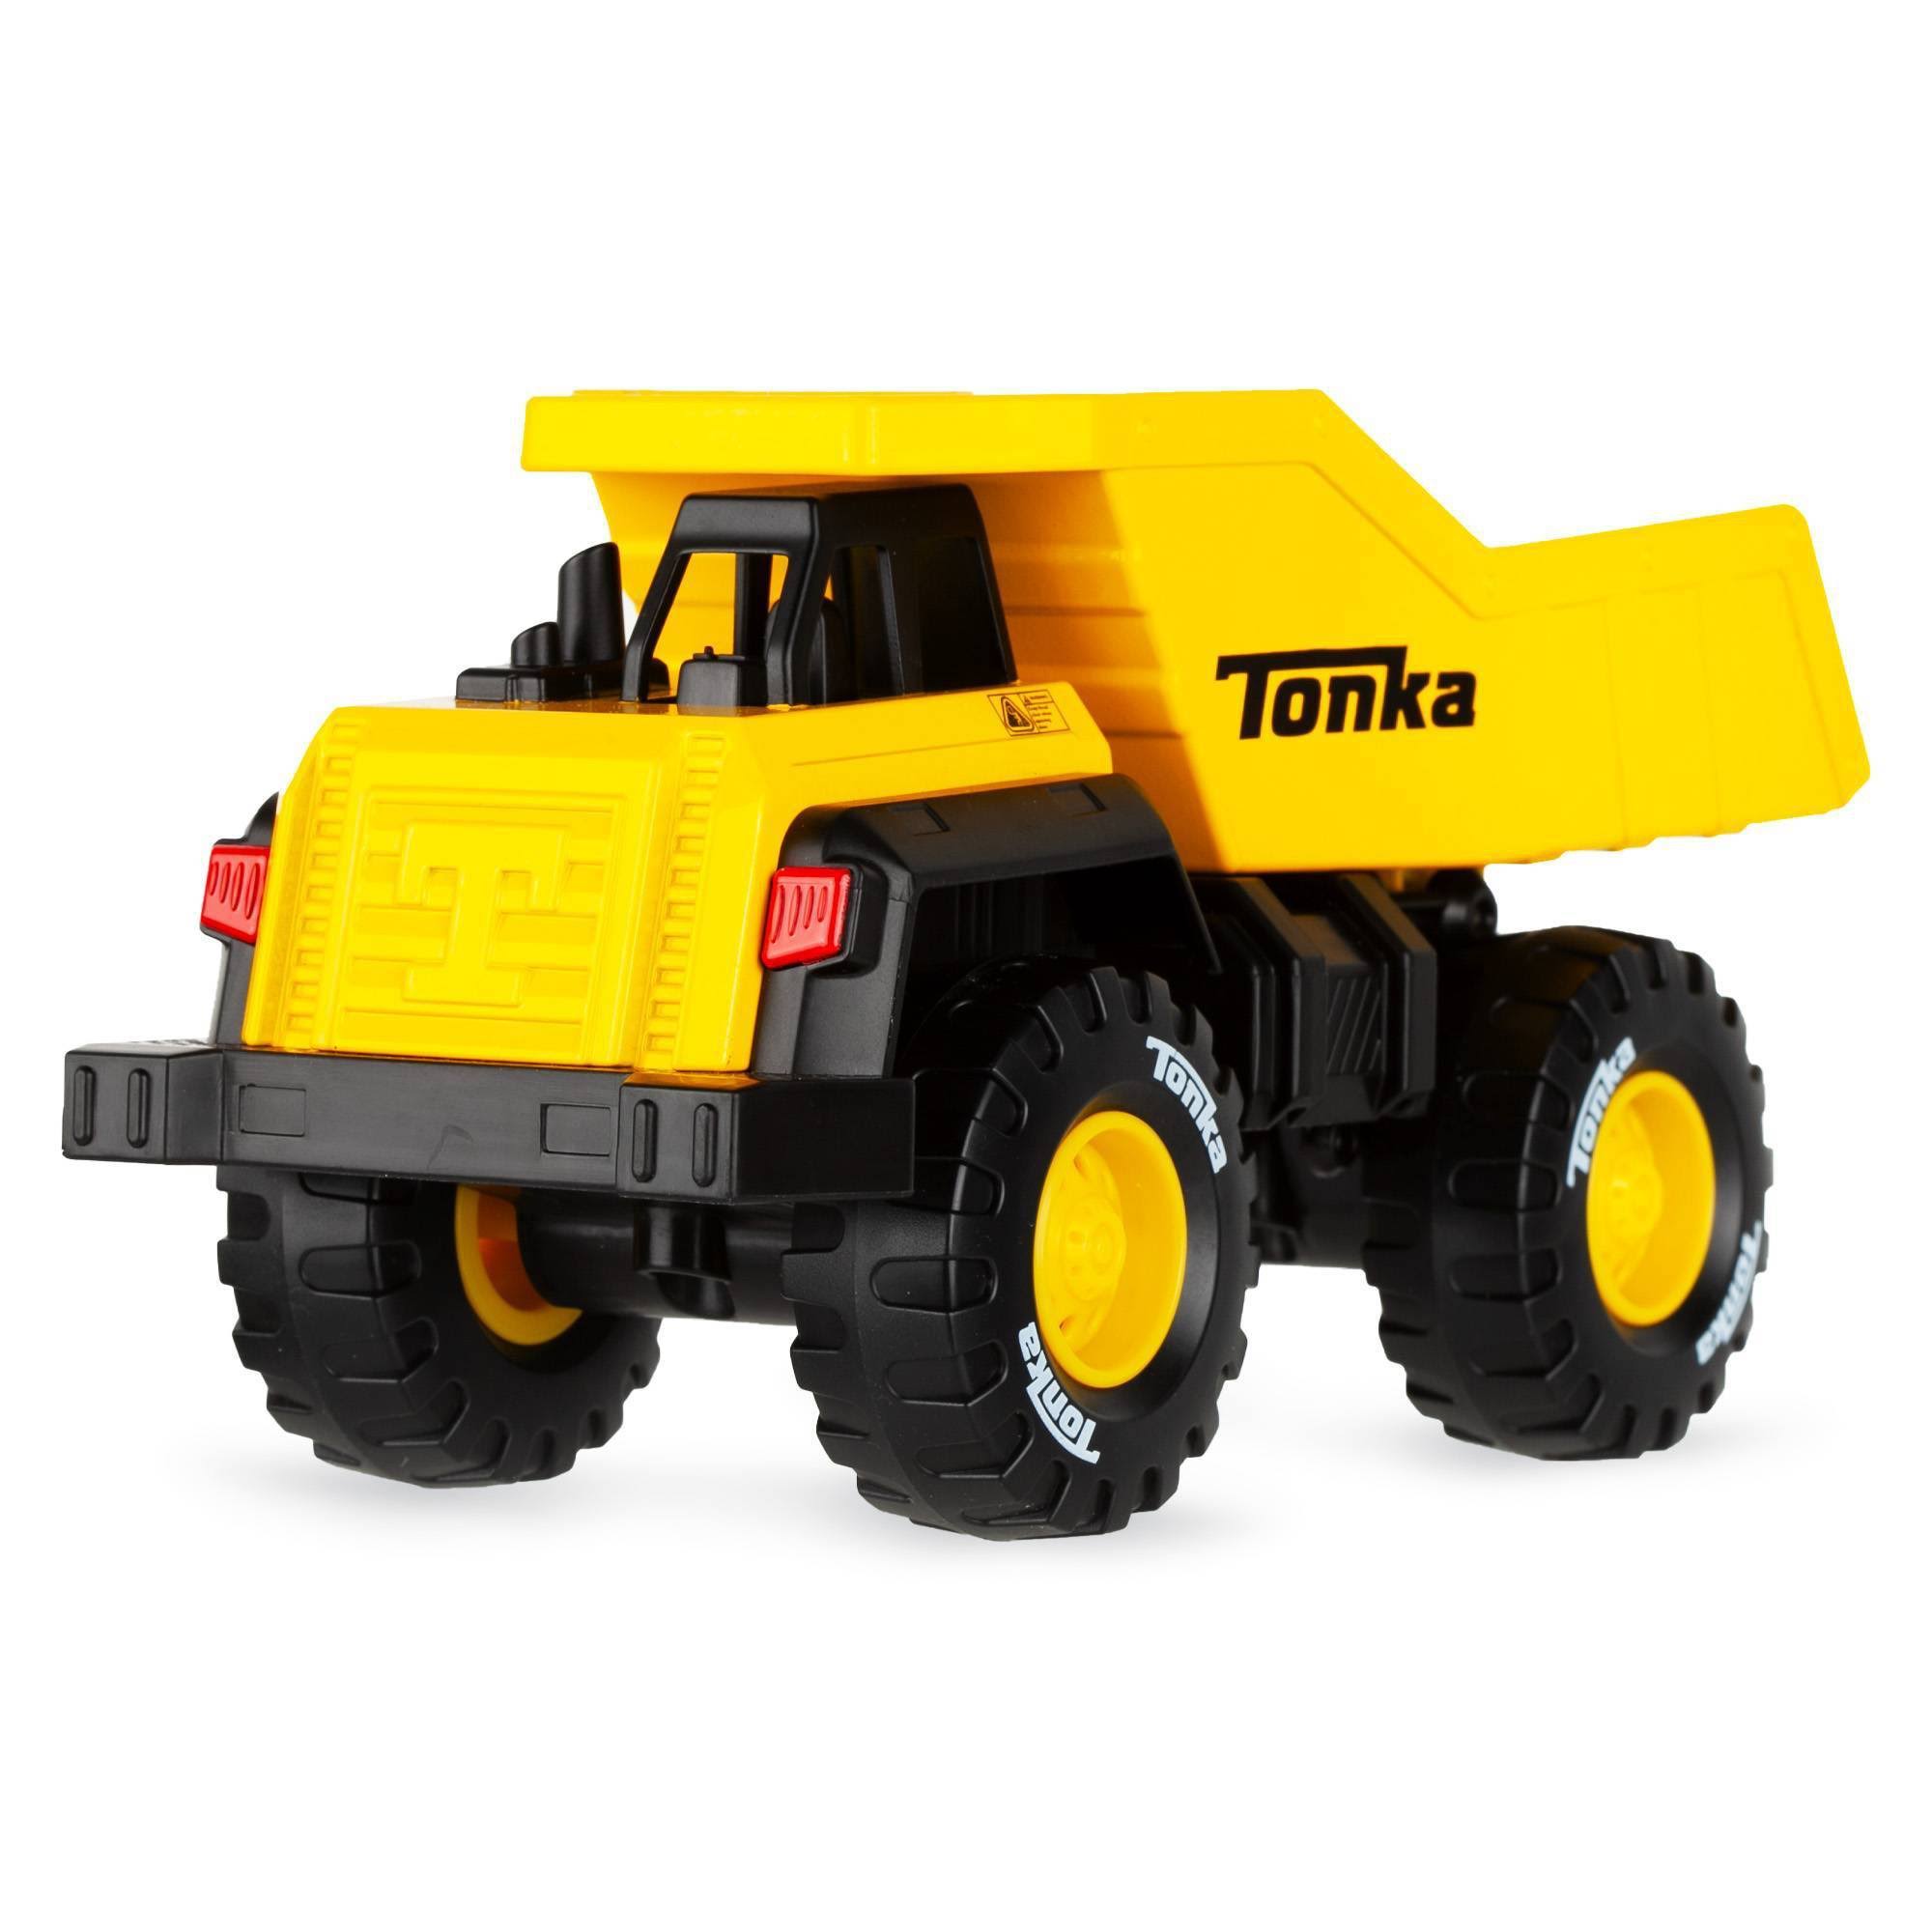 Tonka - Mighty Metal Fleet Dump Truck